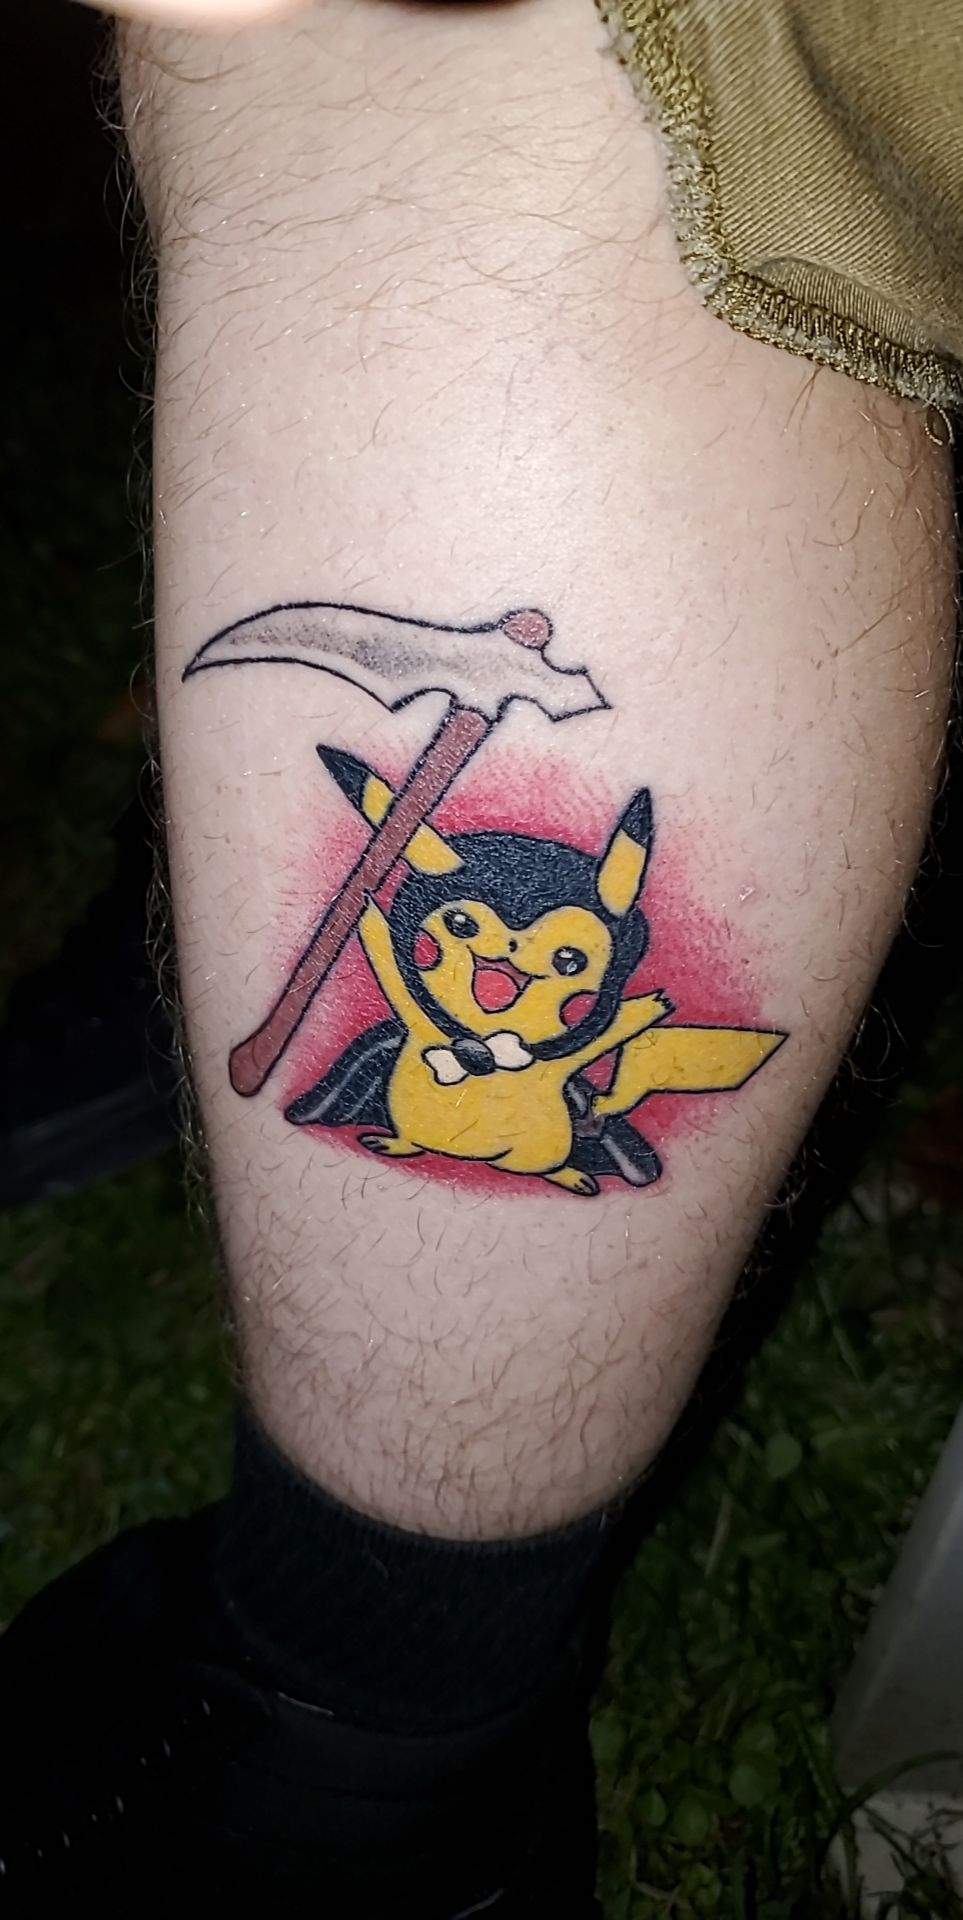 Detective Pikachu Sticker Tattoo. Thanks Wayne for